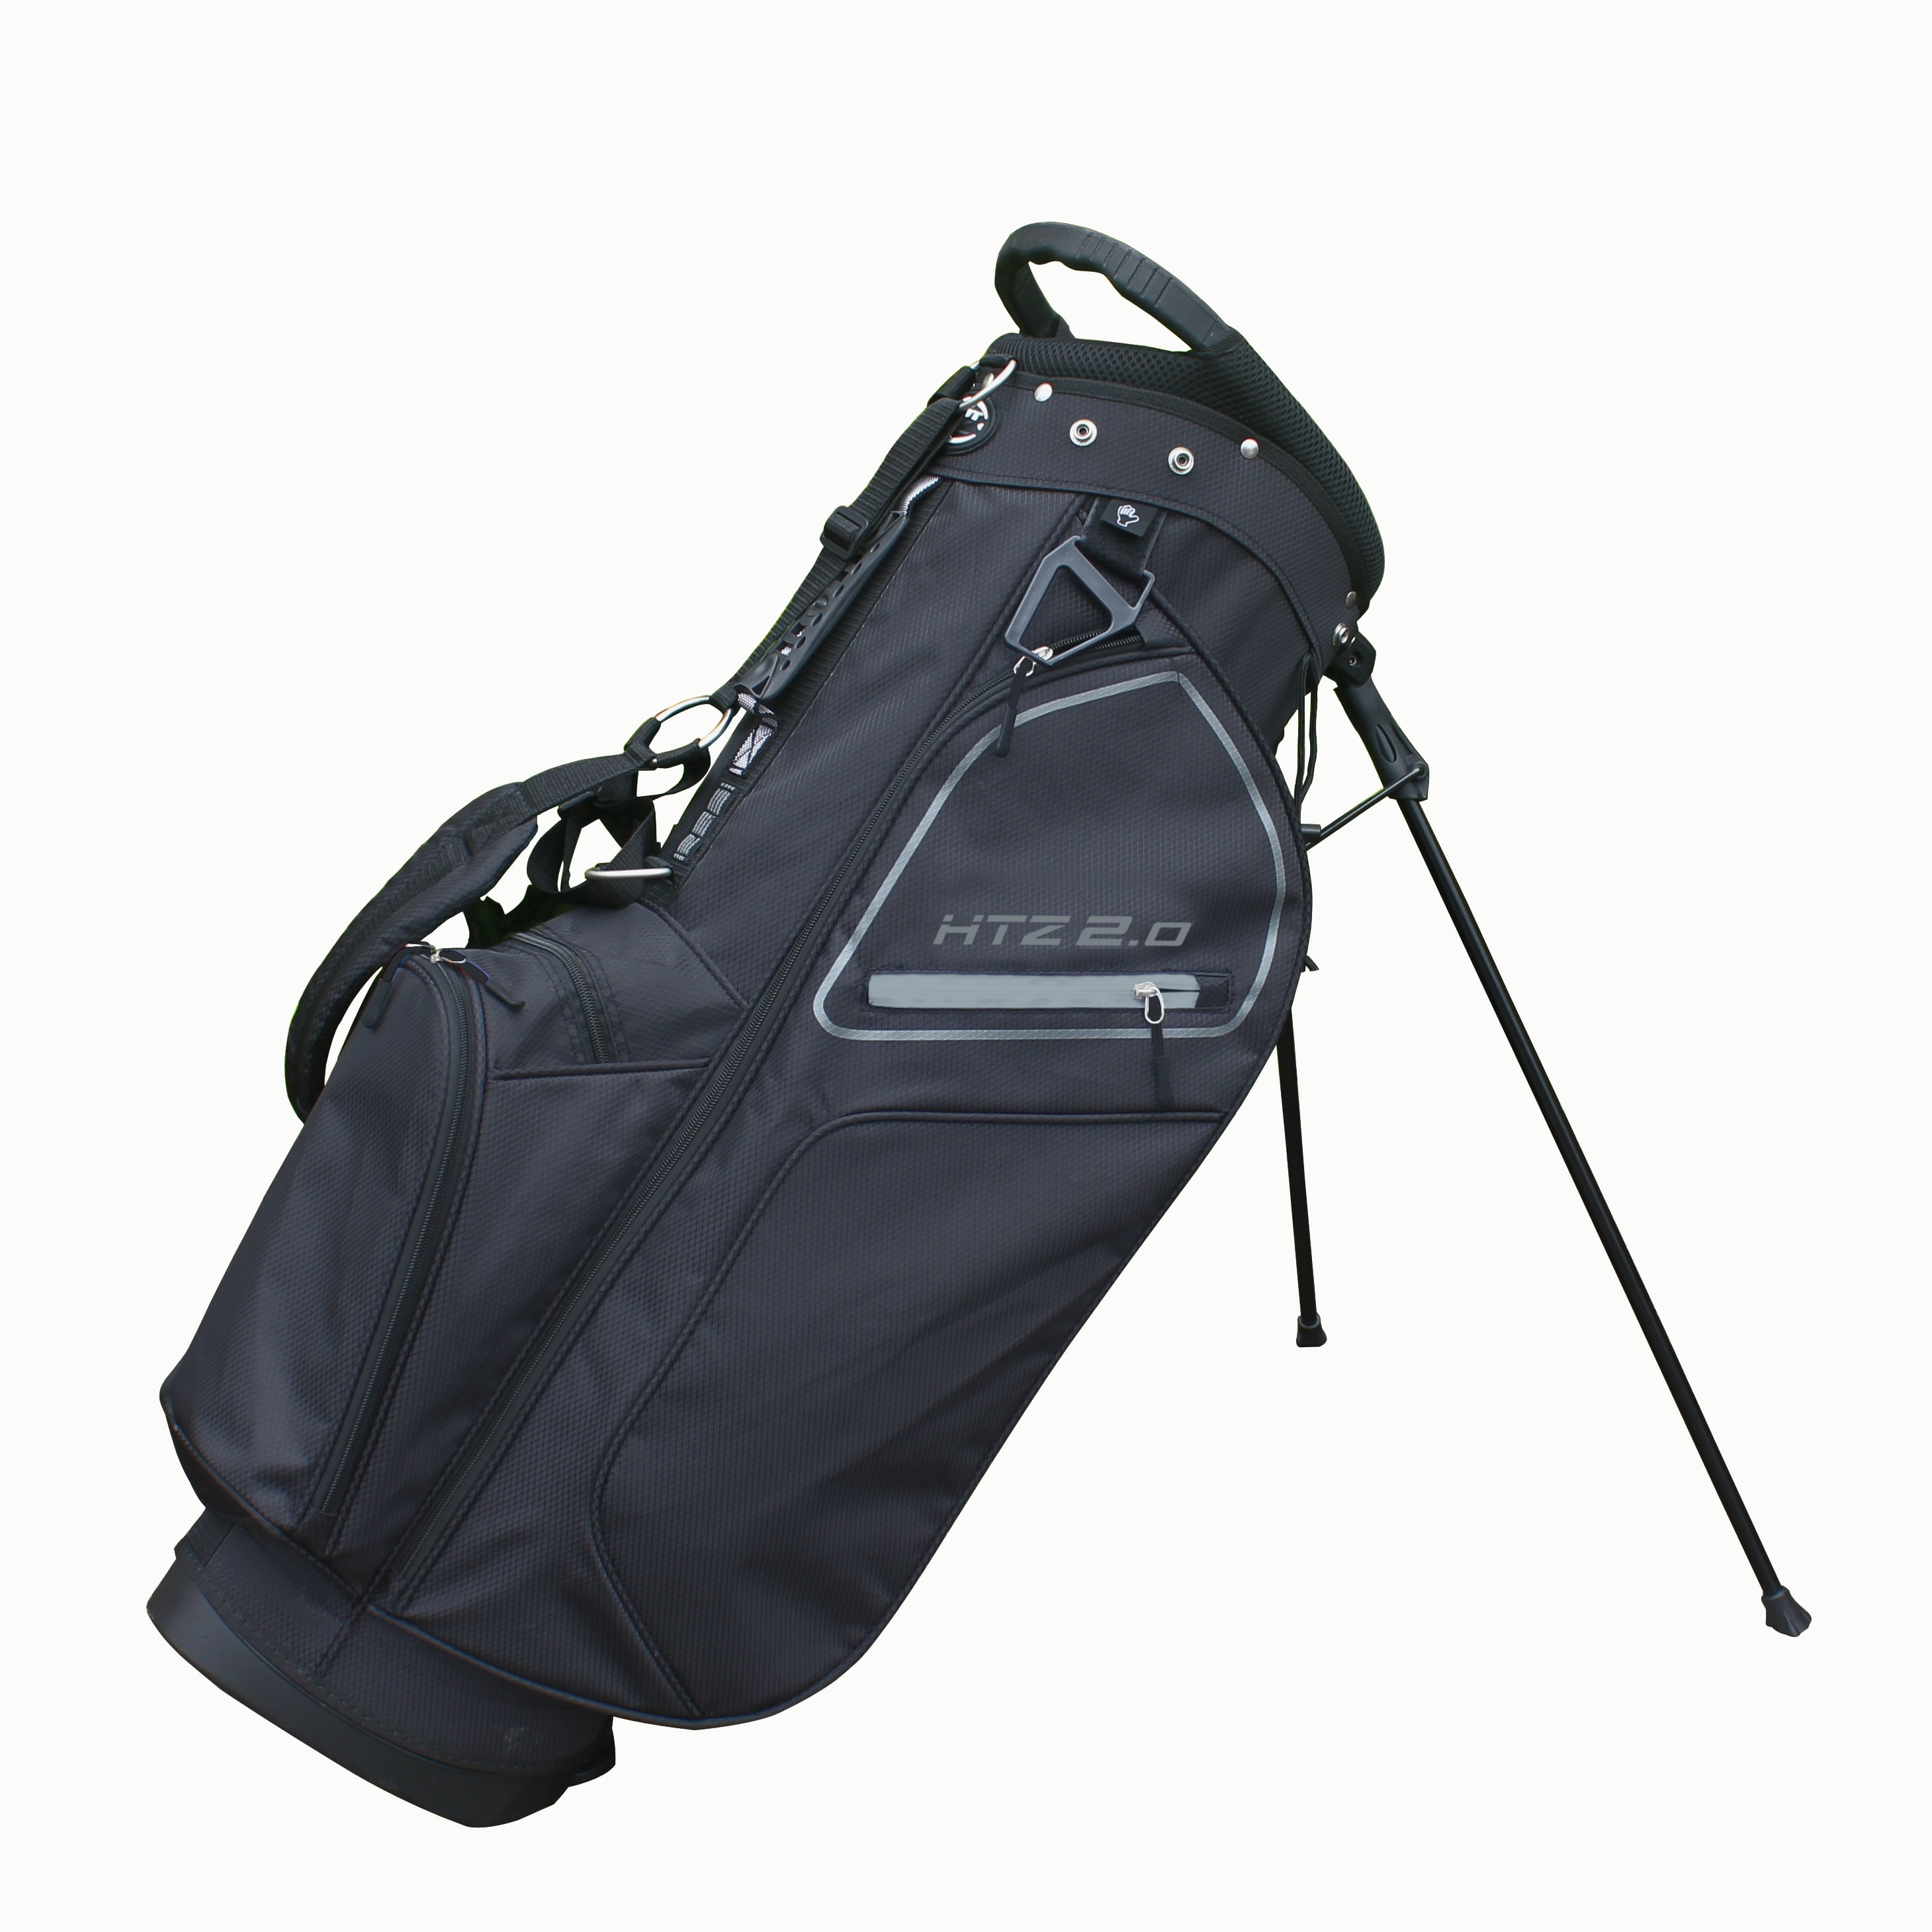 Club Champ Golf Stand Bag, 7 Way, Black - Walmart.com